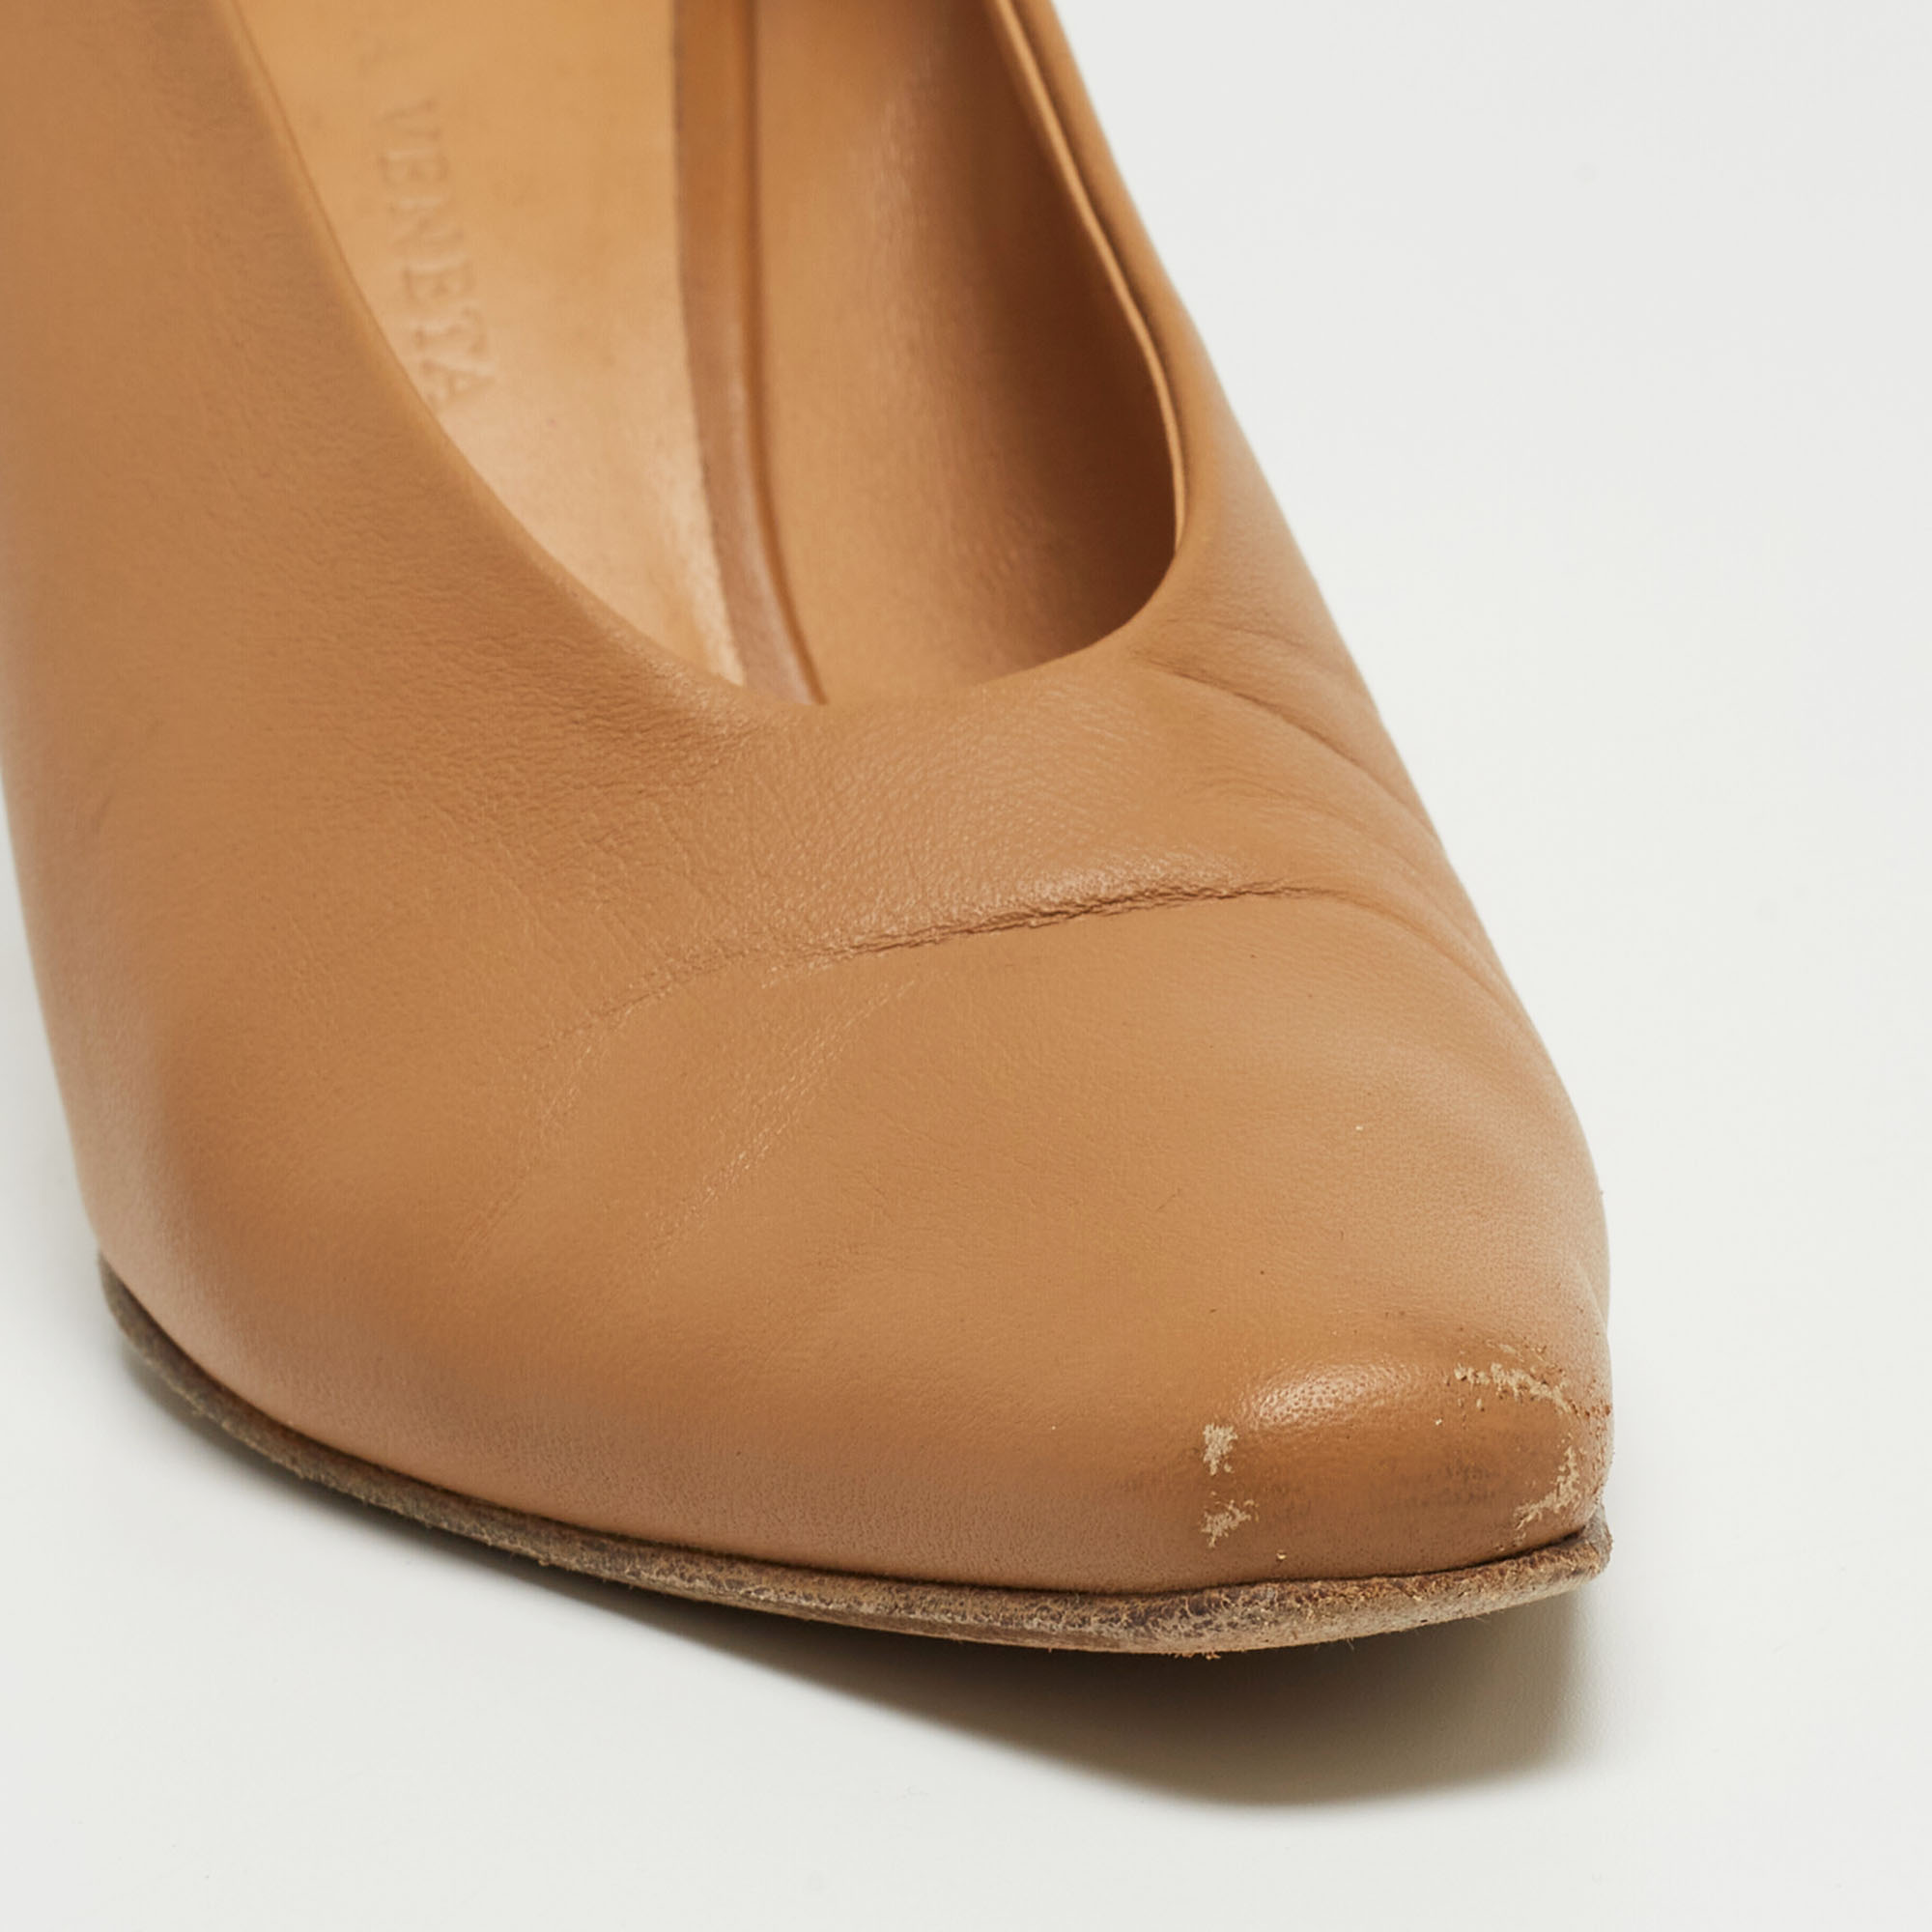 Bottega Veneta Brown Leather Pointed Toe Pumps Size 36